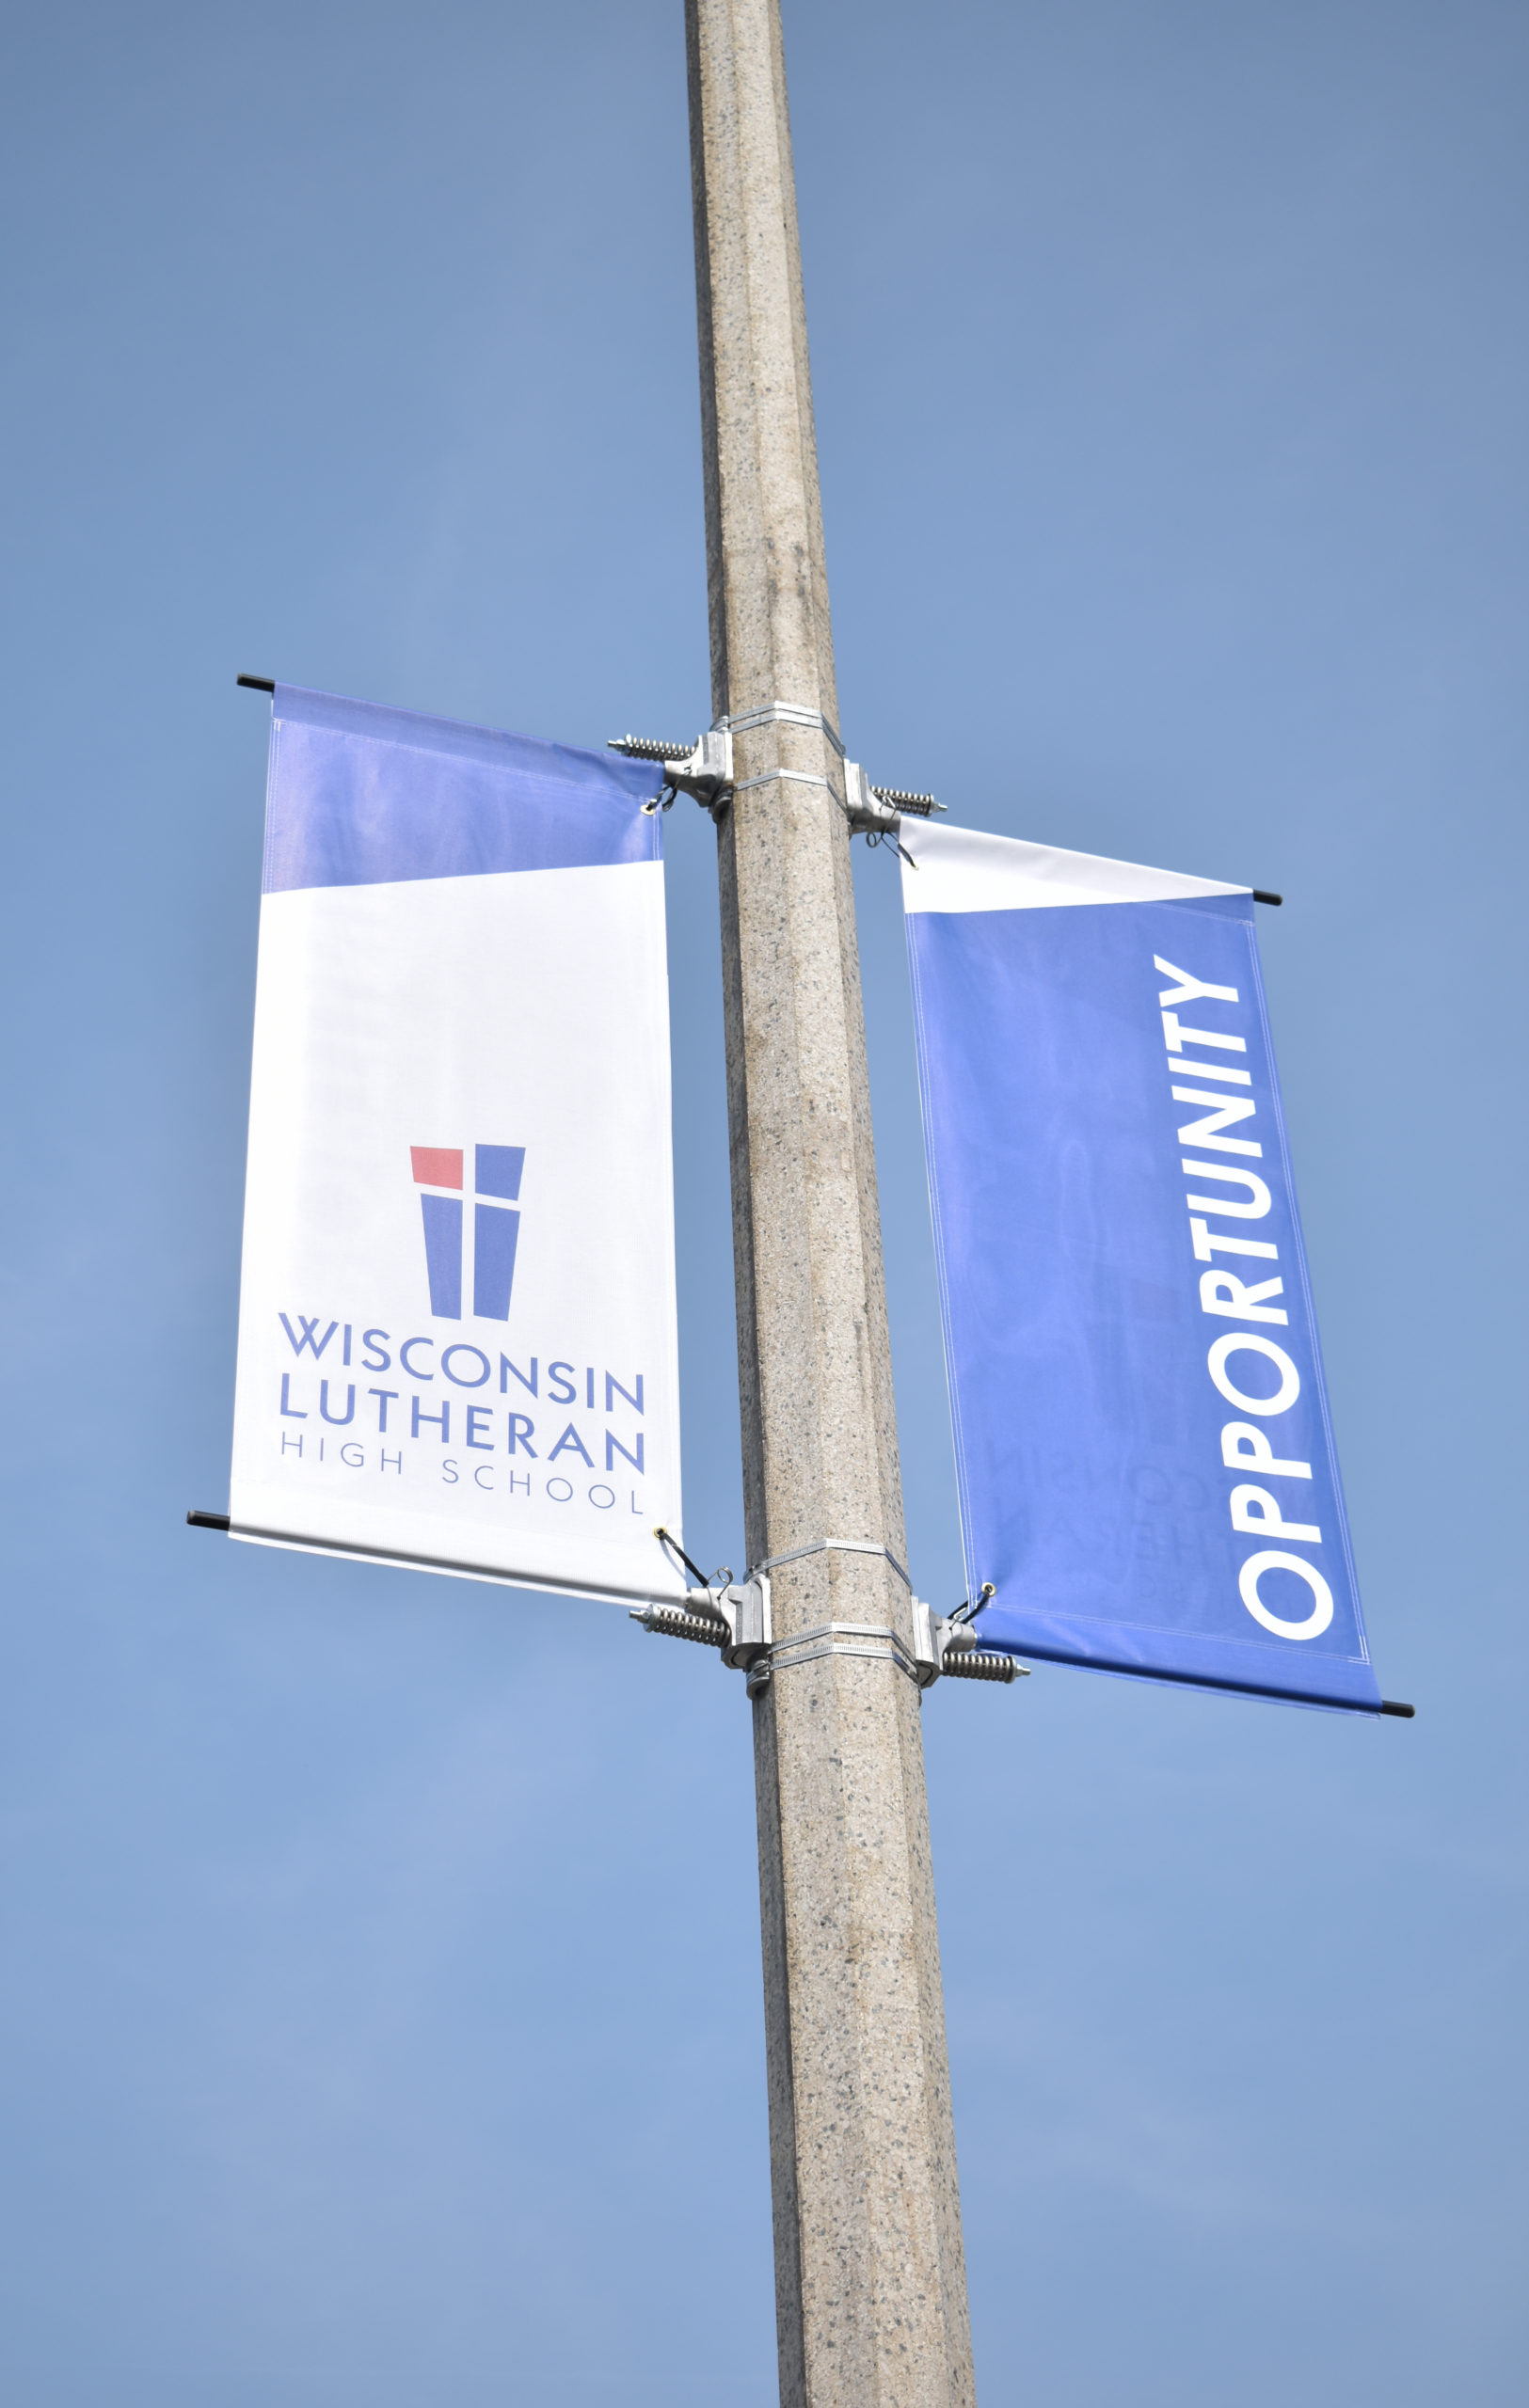 Wisconsin Lutheran high school pole banners